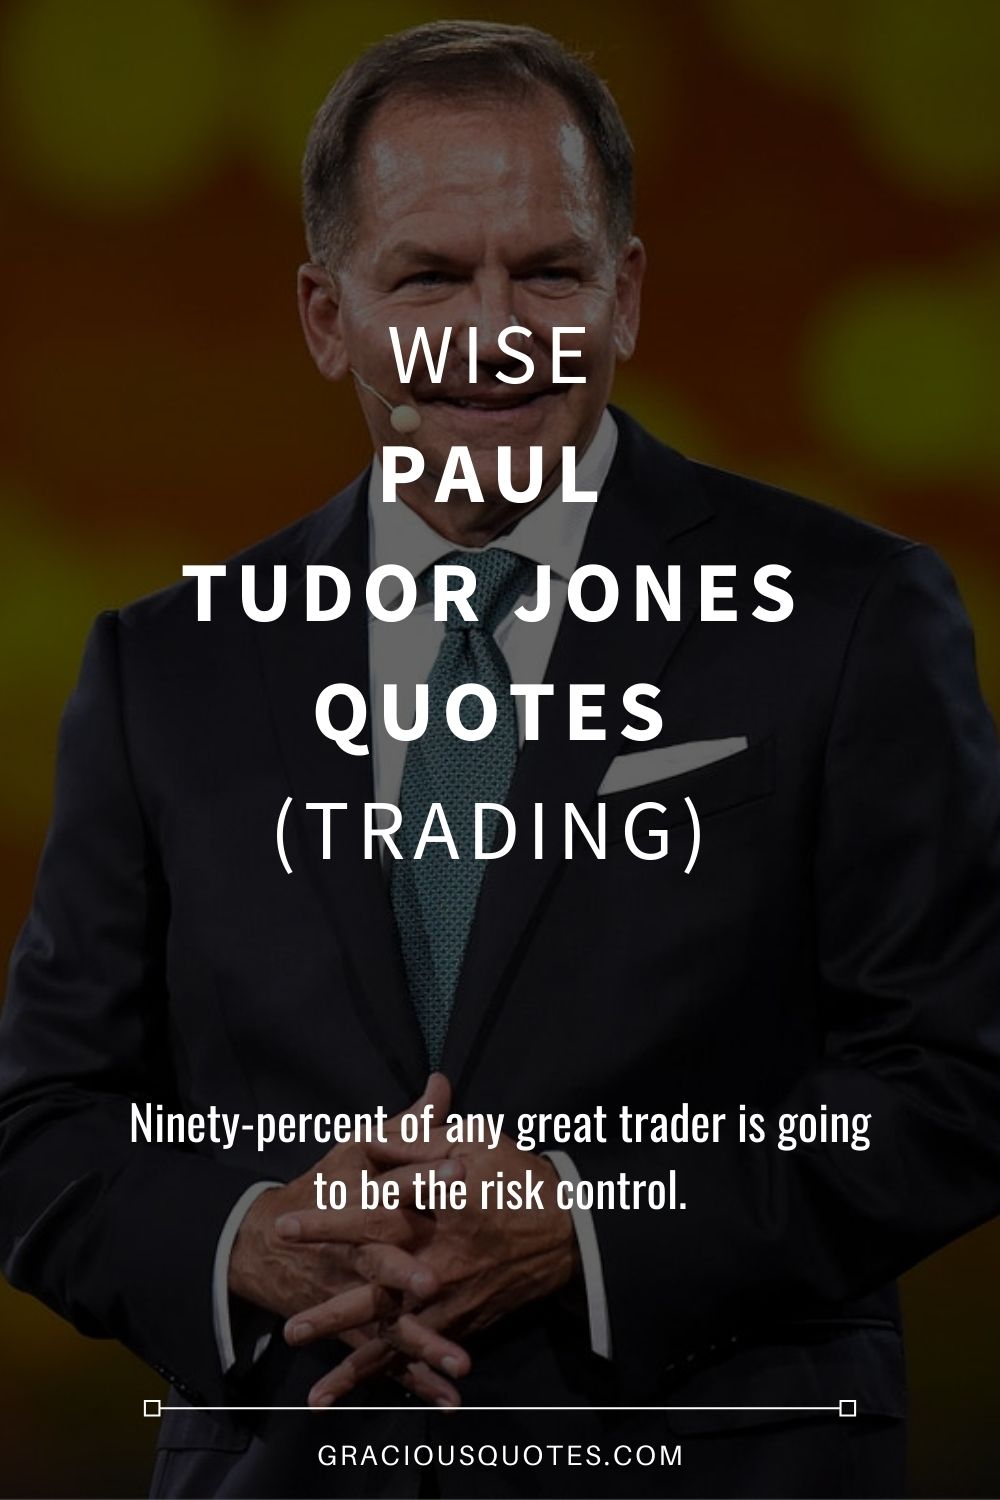 Wise Paul Tudor Jones Quotes (TRADING) - Gracious Quotes